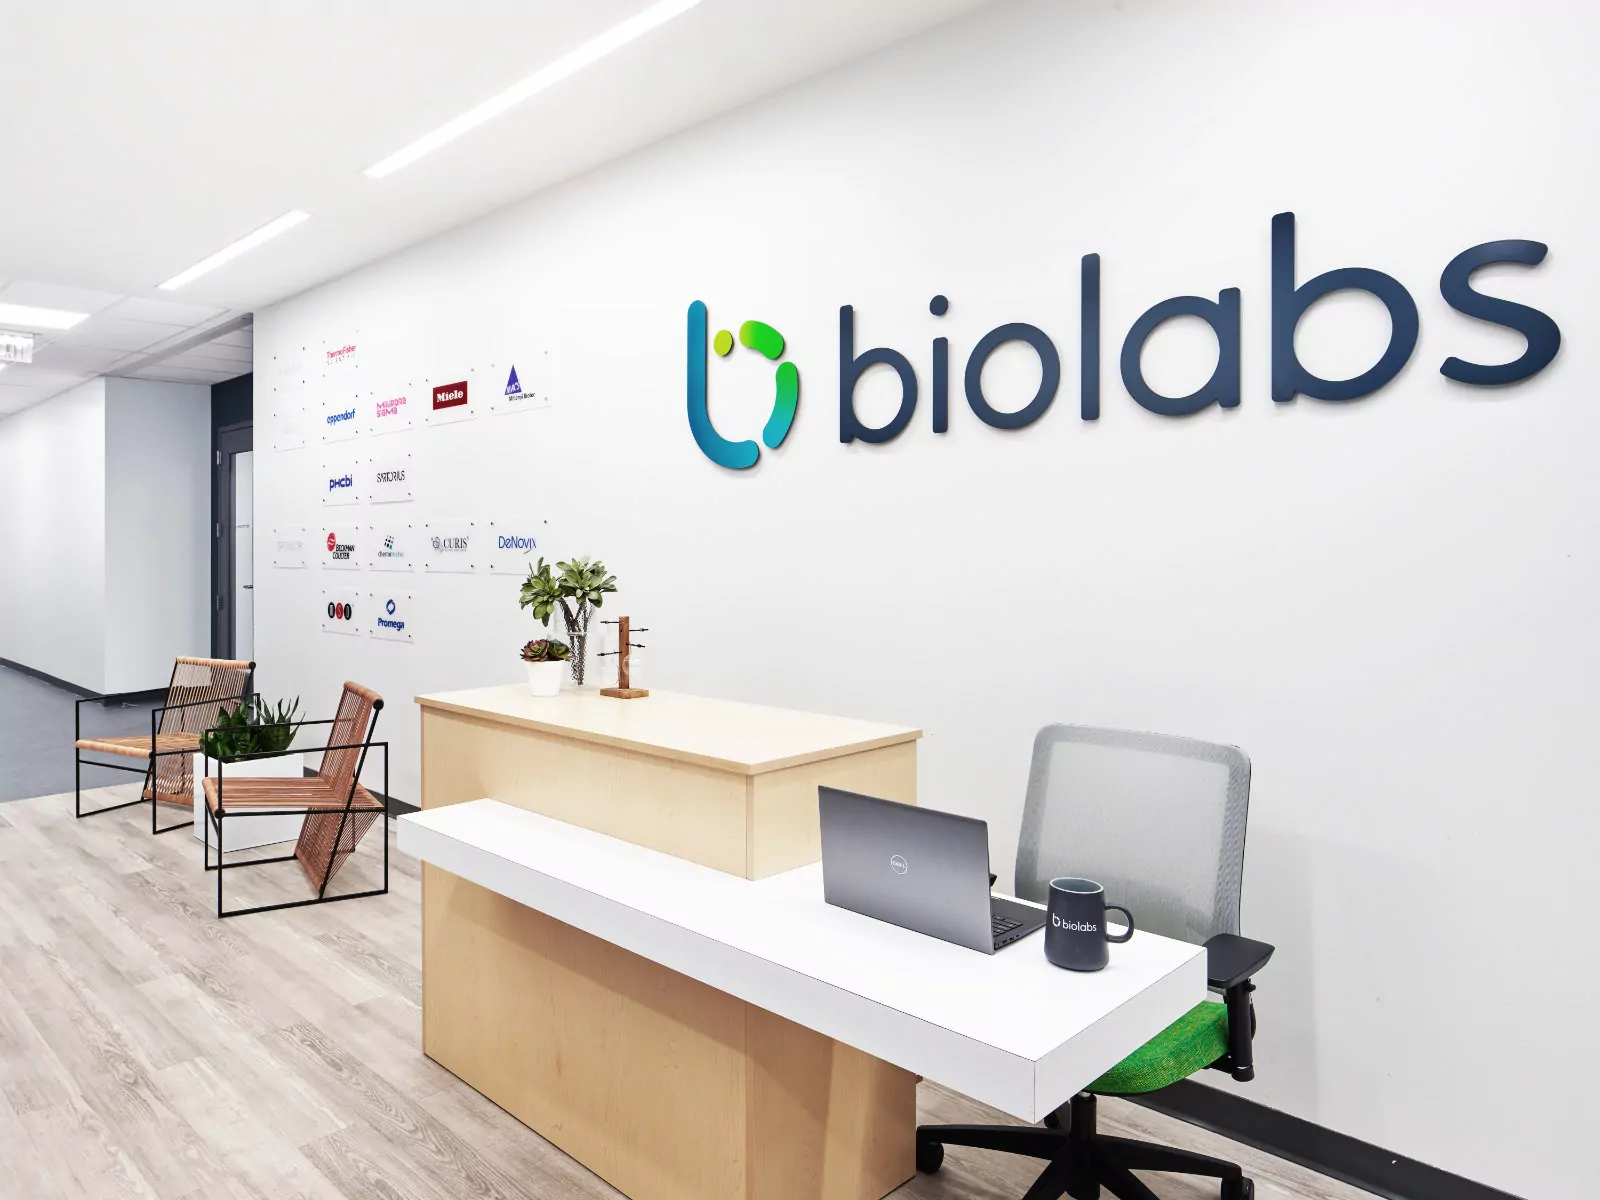 biolabs - new R & D centre